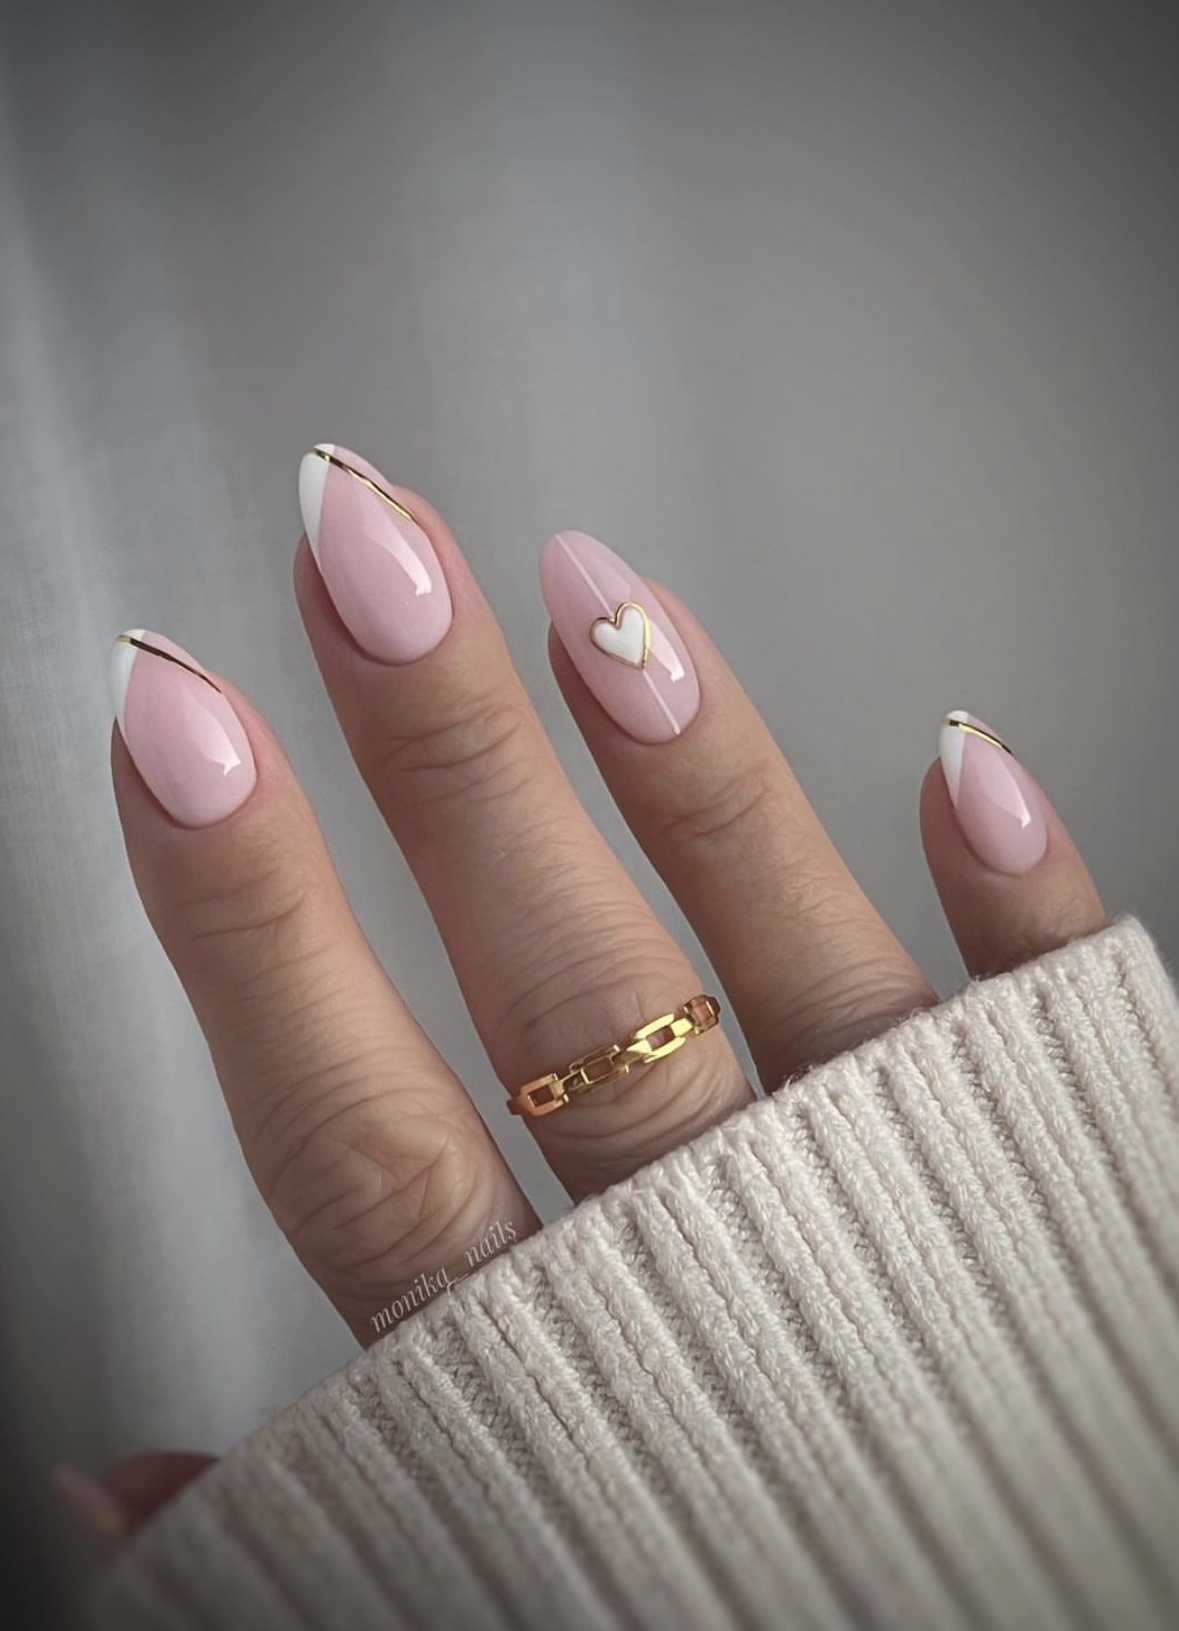 Best nail designs